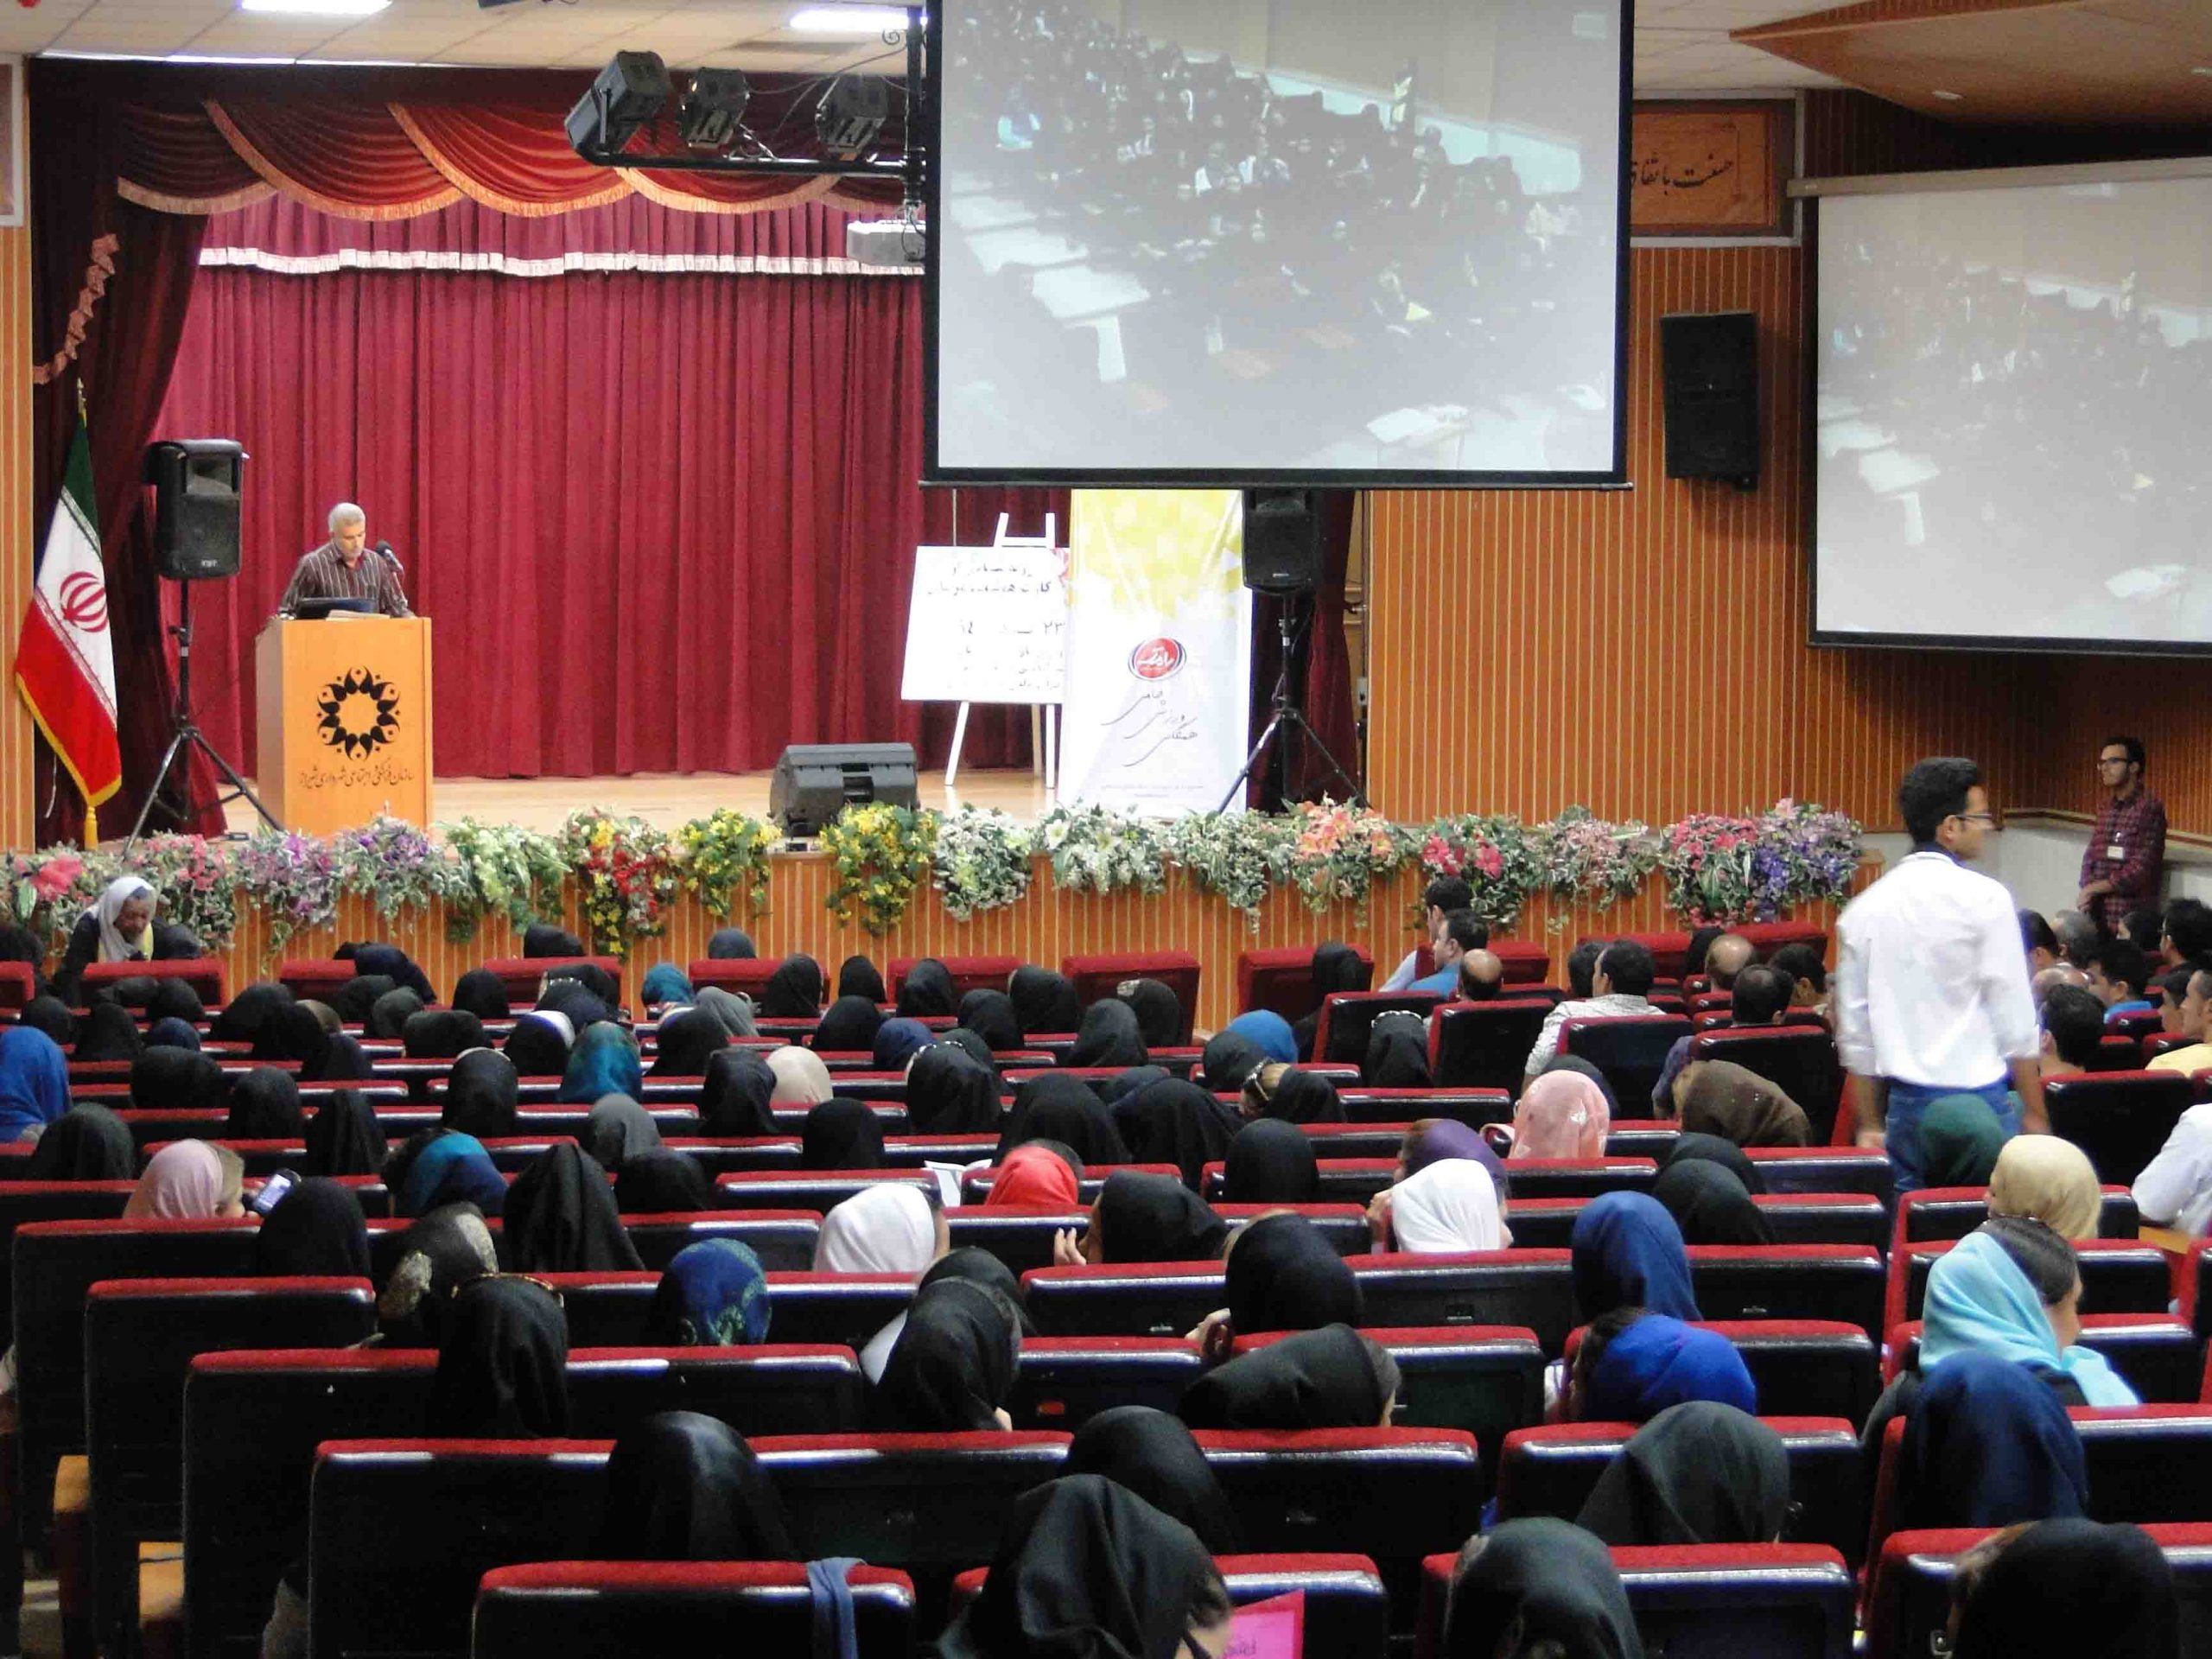 dsc01896 1 scaled اخبار برگزاری همایش مربیان آمادگی جسمانی استان فارس با حمایت شرکت رامک